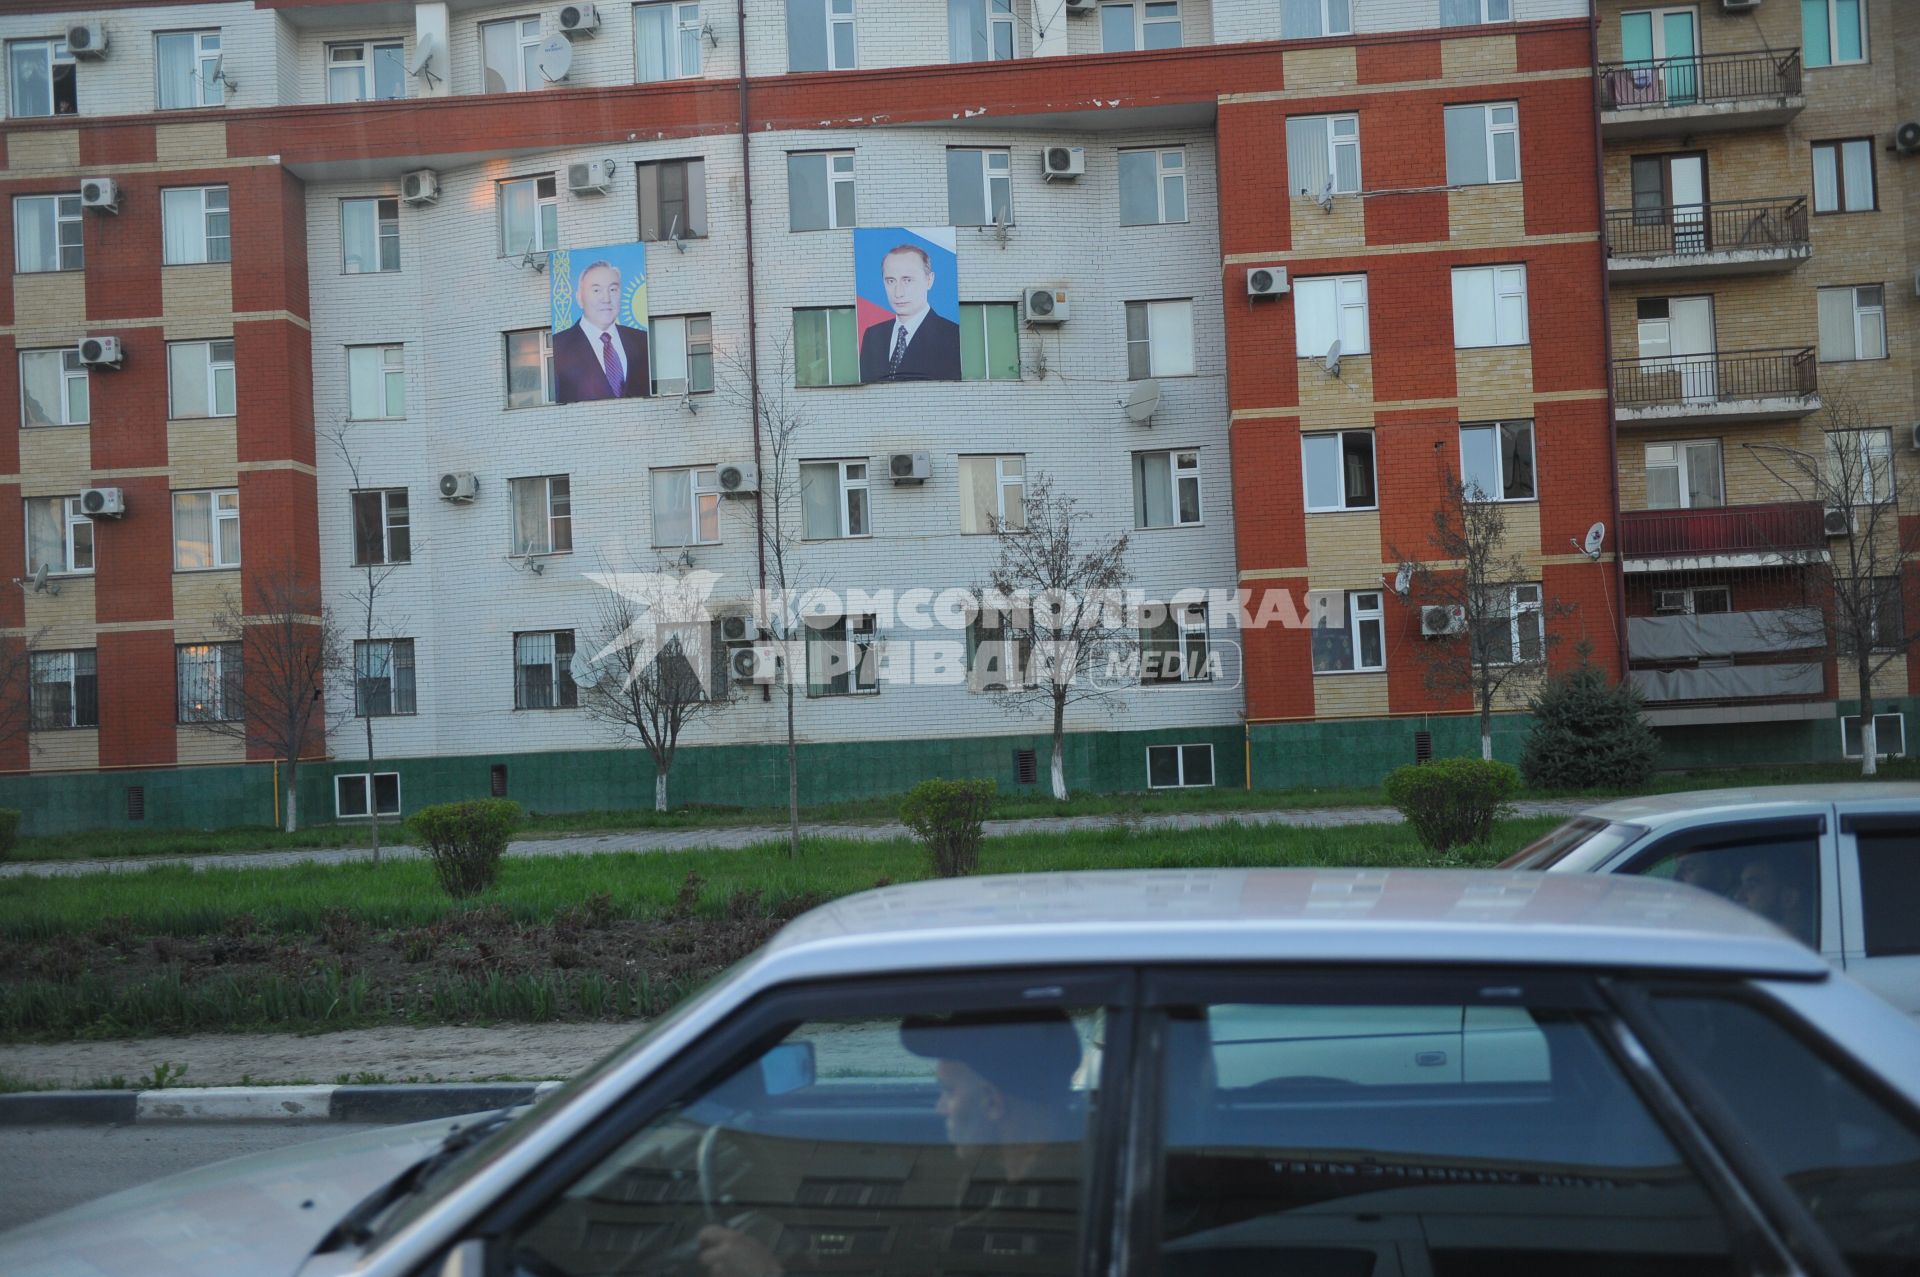 Грозный. Портреты президента Казахстана Нурсултана Назарбаева (слева) и президента РФ Владимира Путина на жилом доме.